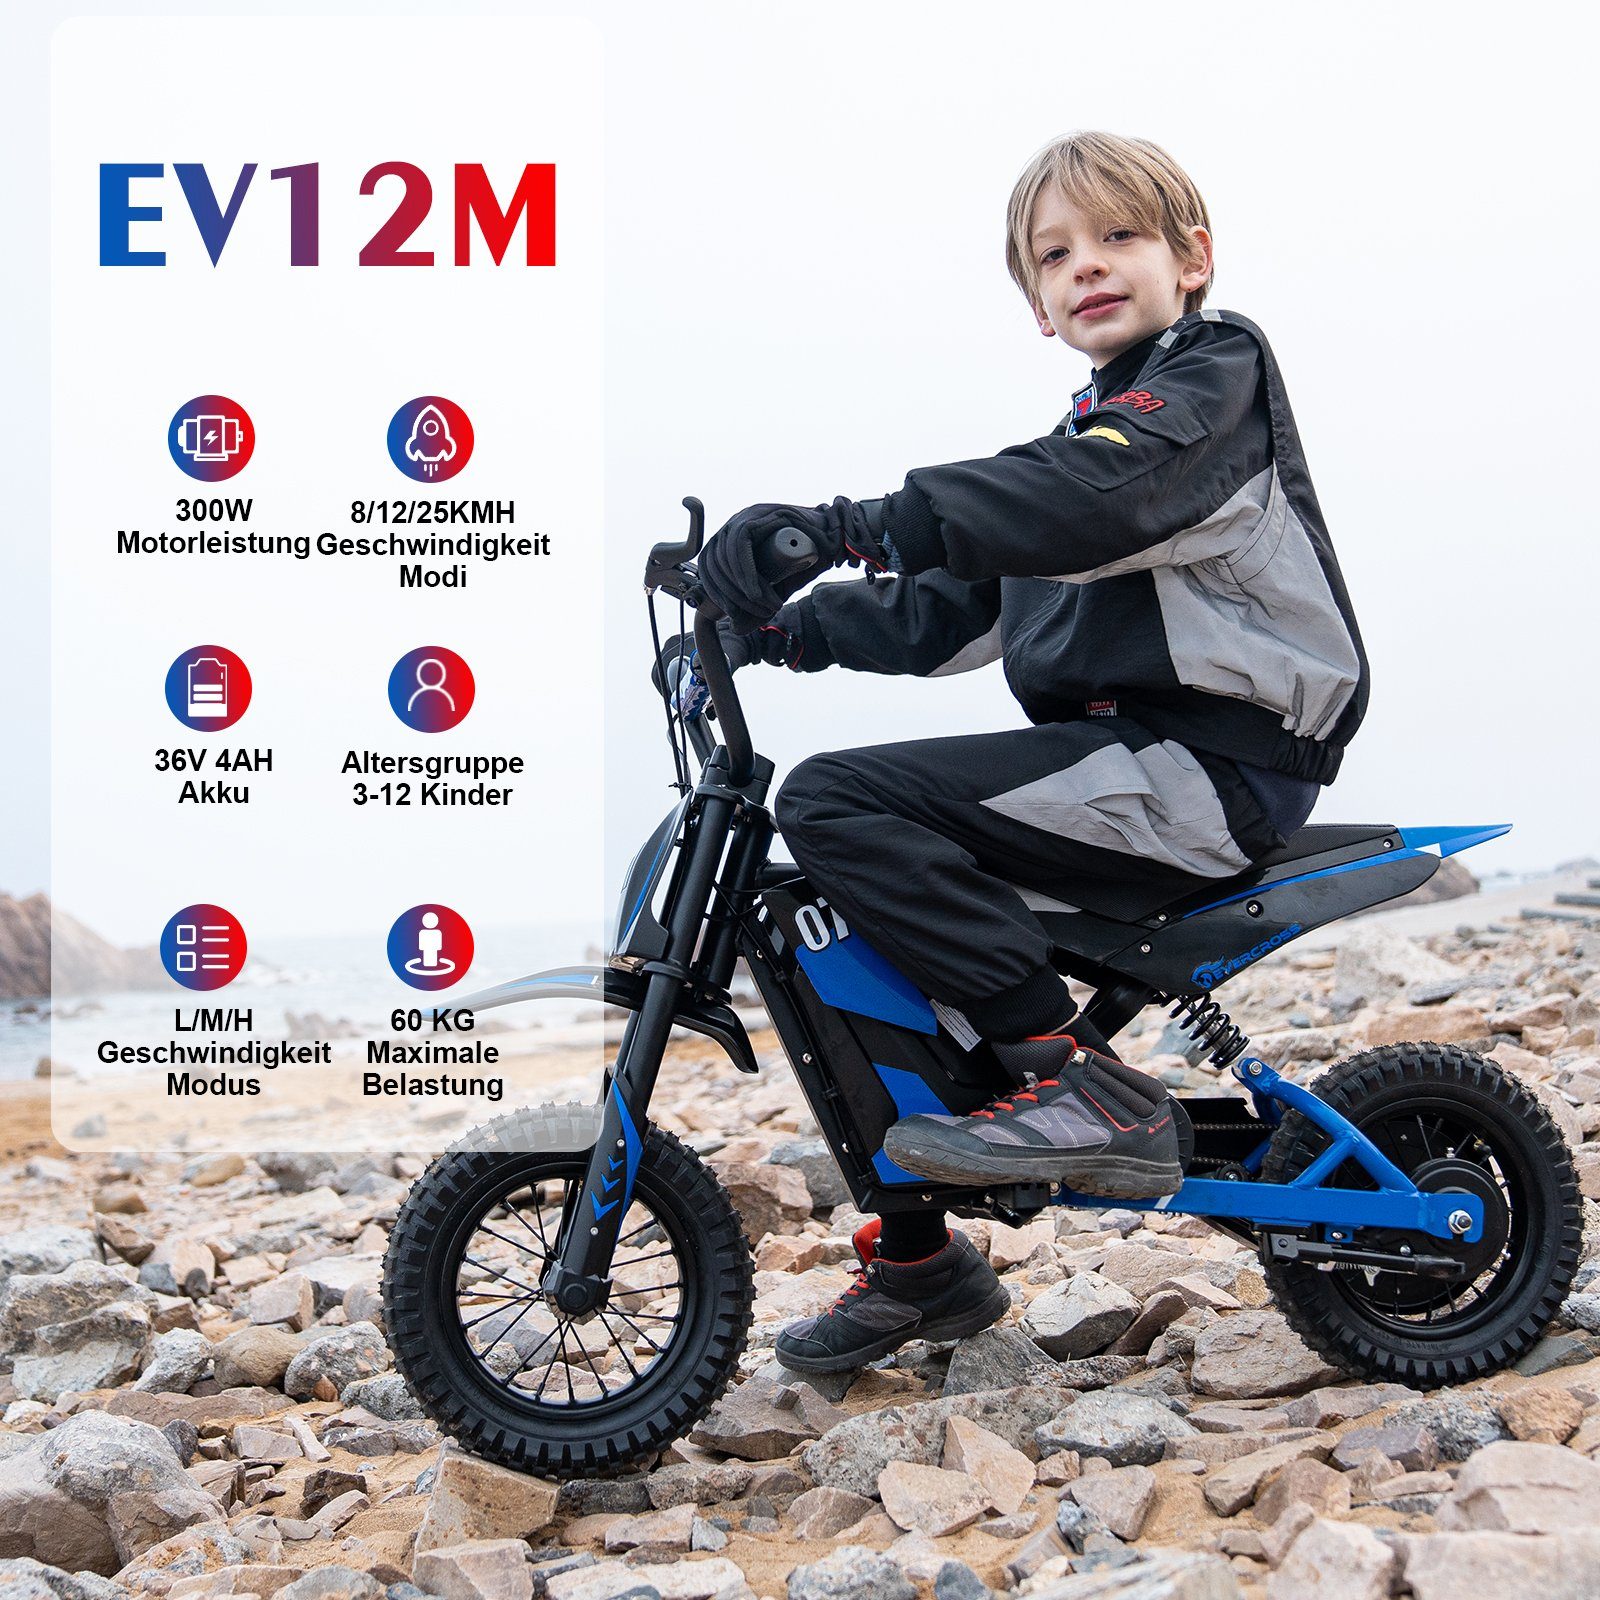 EV12M blau 12 Kinder Lange Luftreifen, KMH, Zoll Reichweite, Elektro-Kindermotorrad für Elektro Motorrad Evercross Kinder Motor 15KM 8/12/25 300W mit Elektromotorrad